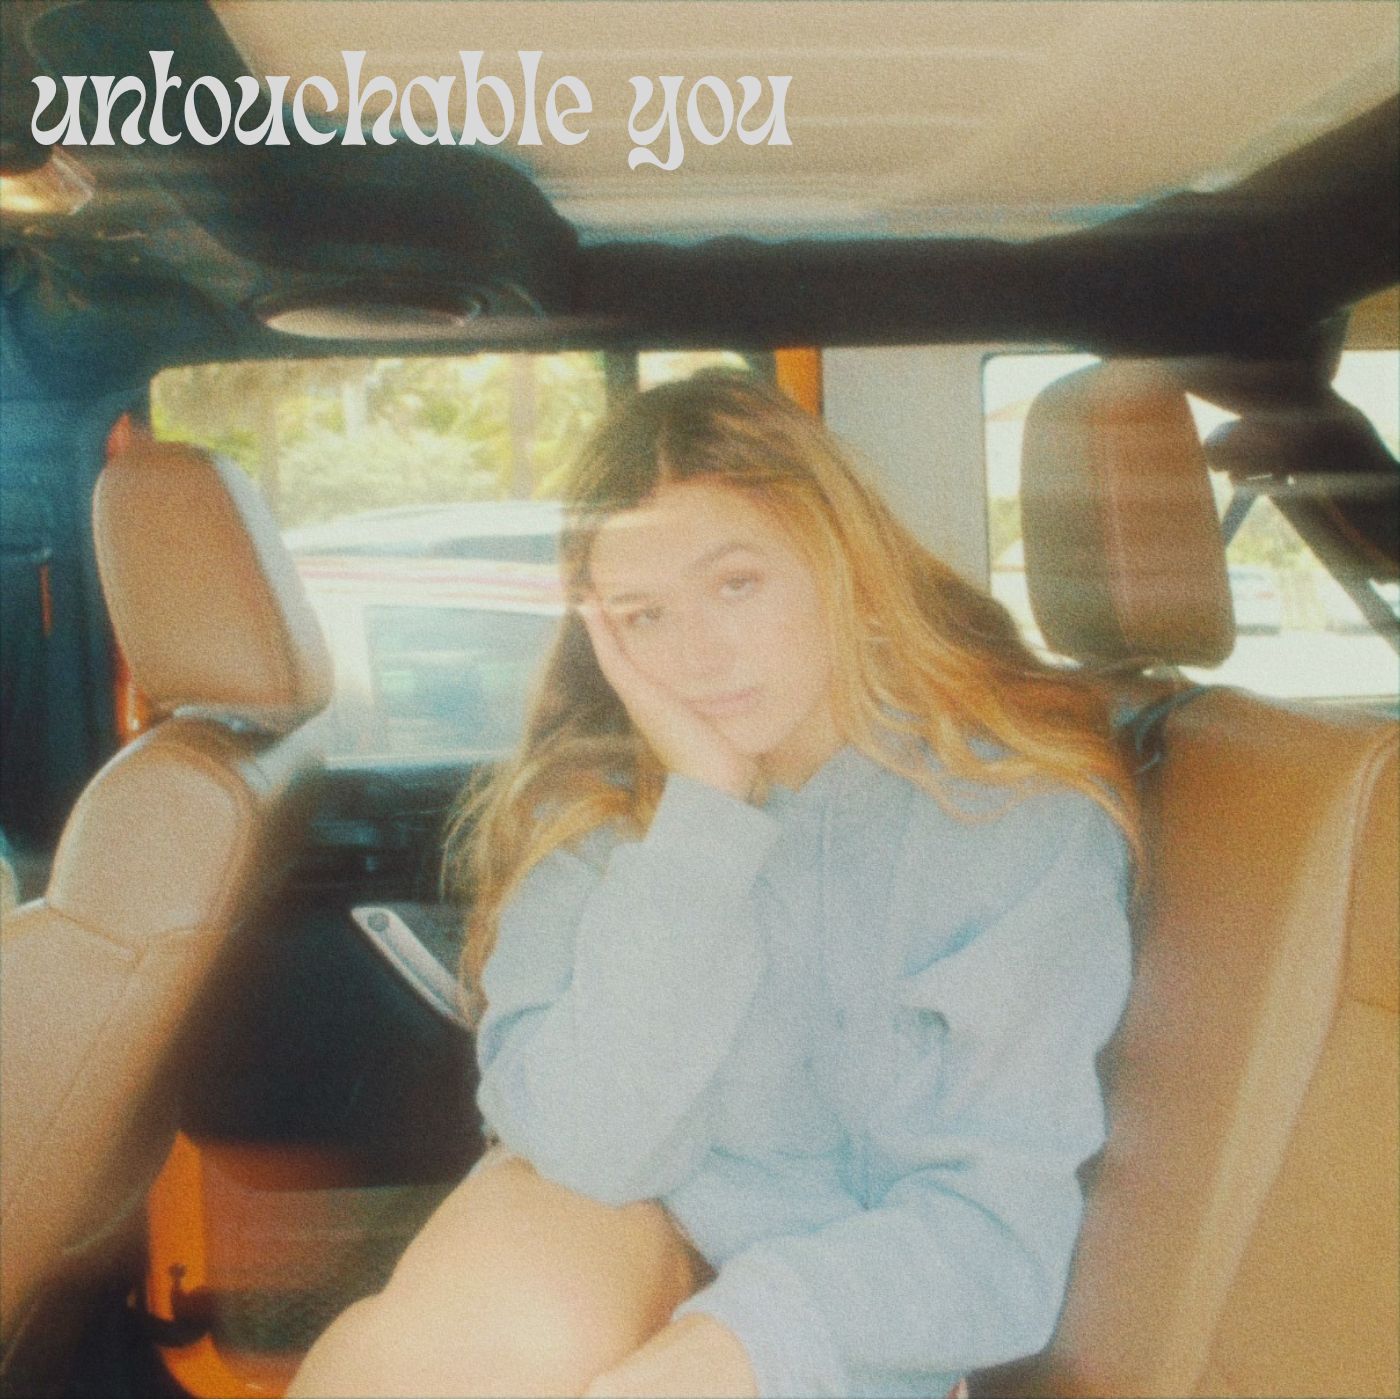 Untouchable You